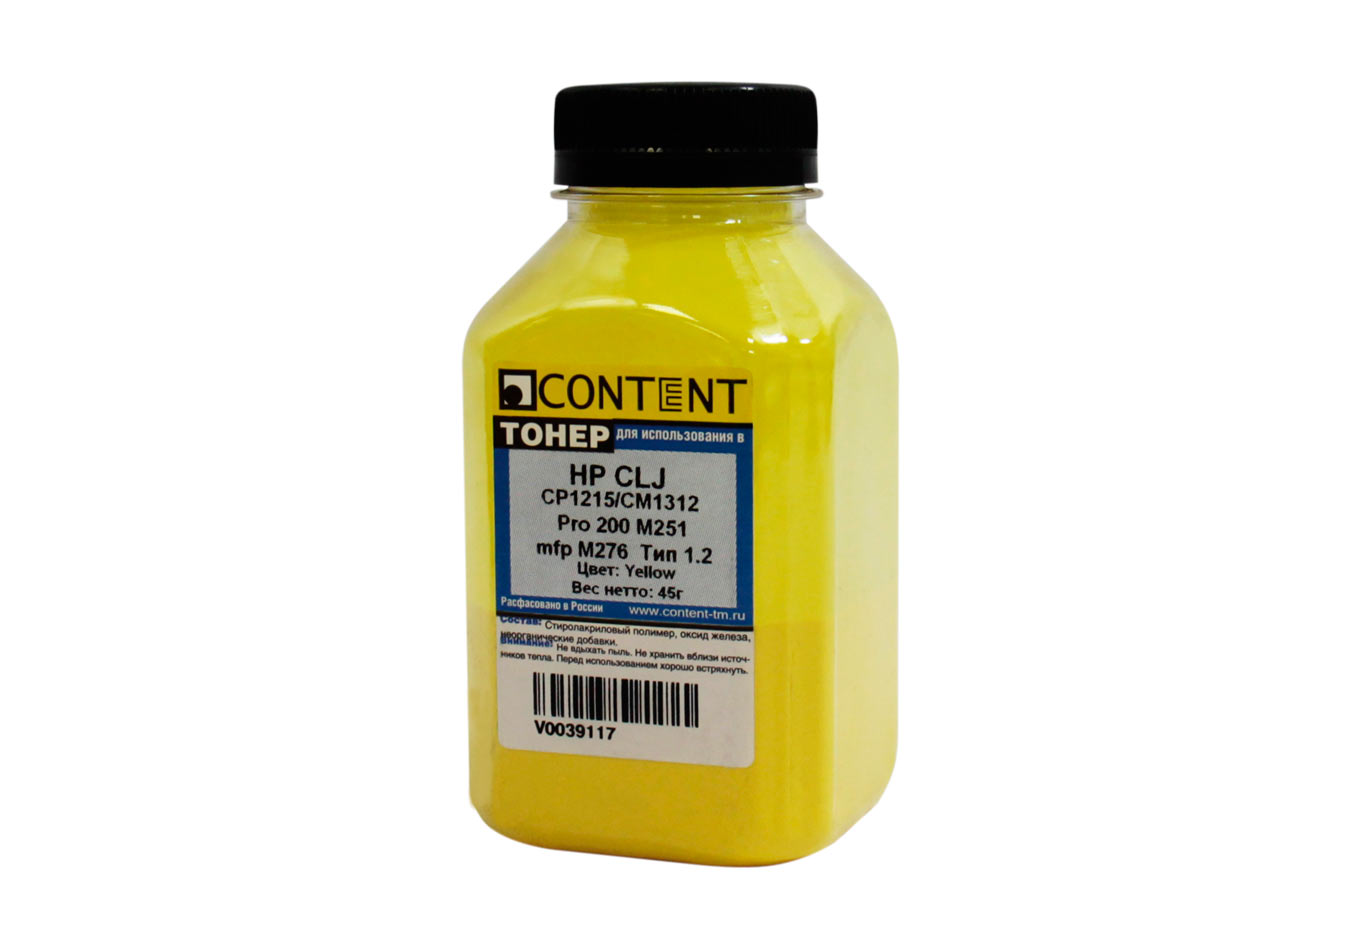 Тонер Content, бутыль 45 г, желтый, совместимый для Canon CLJ CM1300/CM1312/CP1210/CP1215/Pro CP1525/CM1415/Pro 200 M251/mfp M276, I-Sensis LBP-7100/7110/MF8230/8280, Тип 1.2 (V0039117)